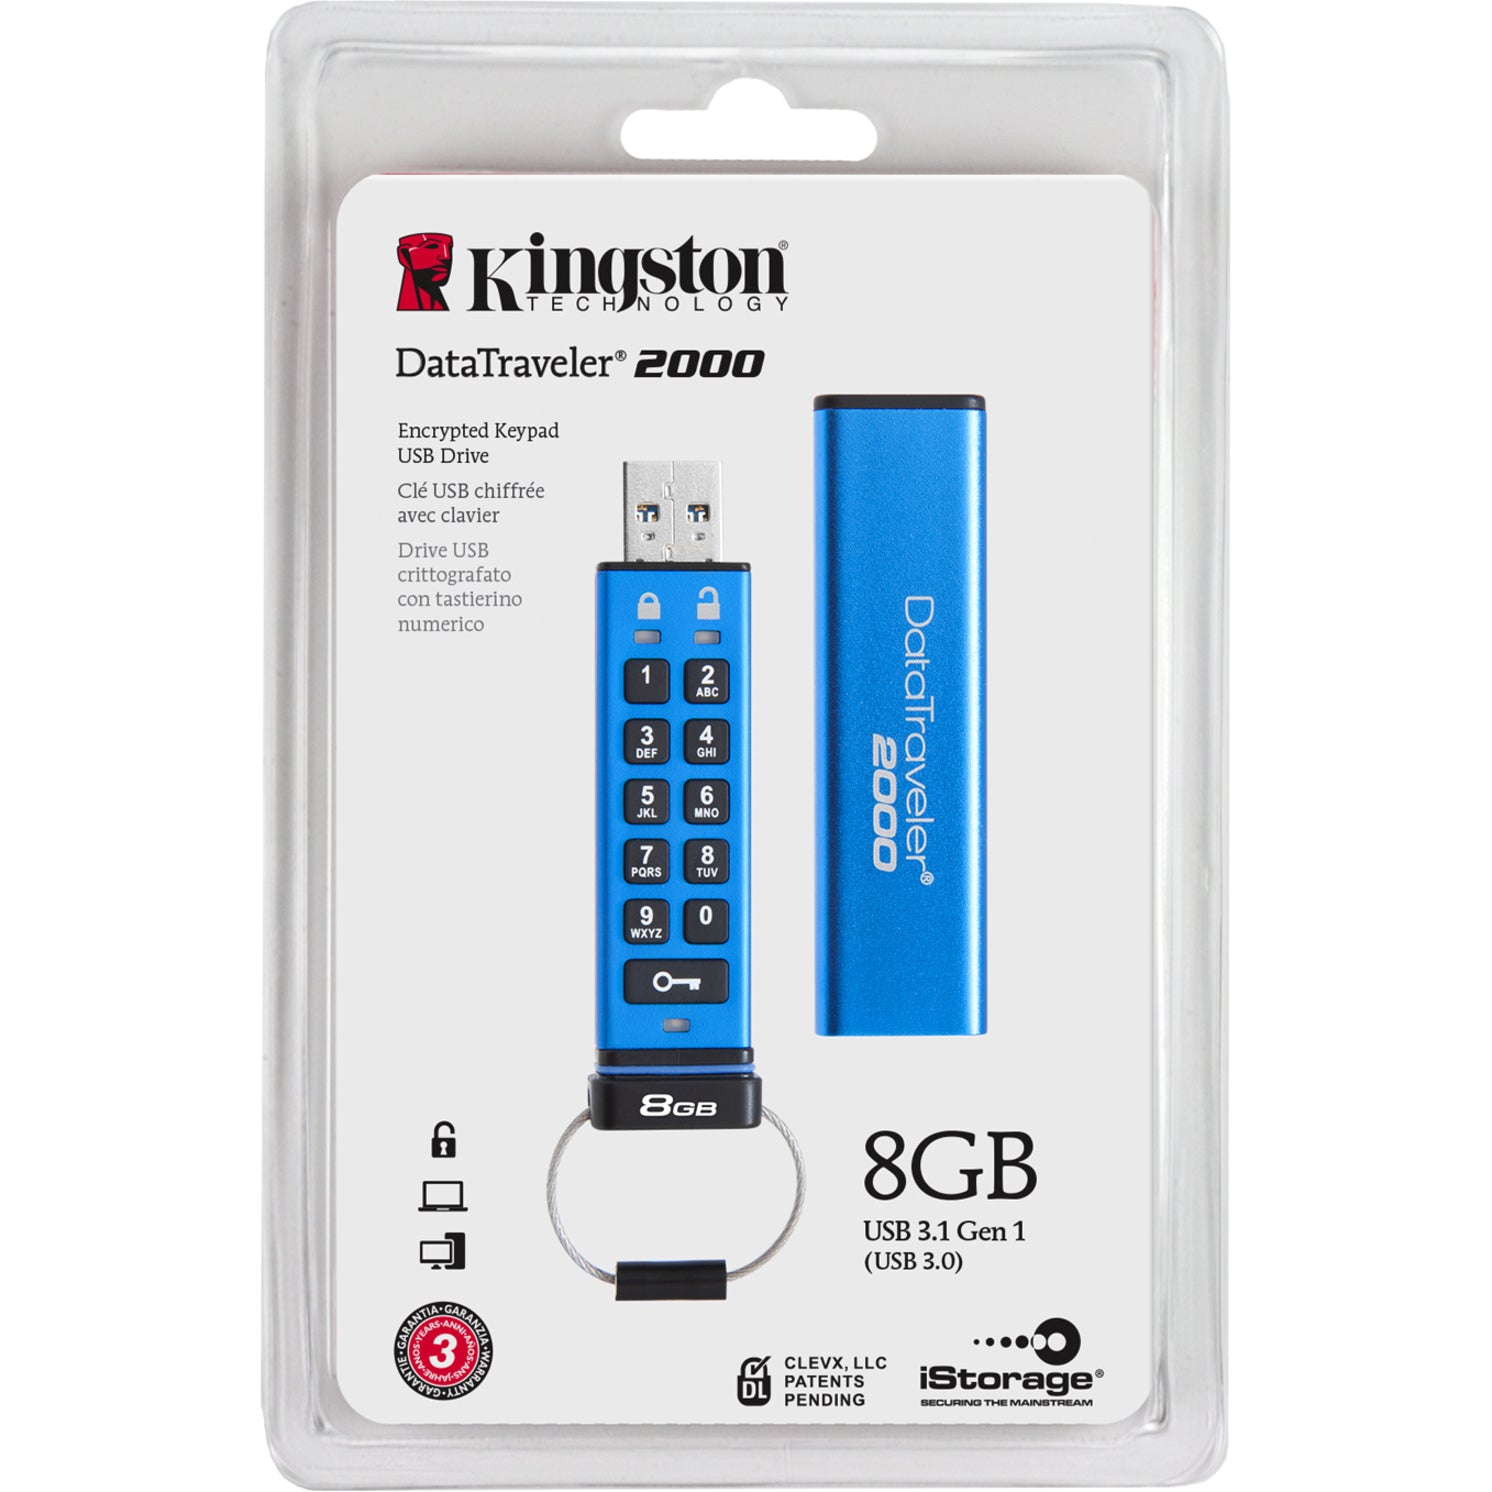 Kingston DT2000/8GB DataTraveler 2000 USB 3.1 Flash Drive, 8GB Storage, 256-bit AES Encryption